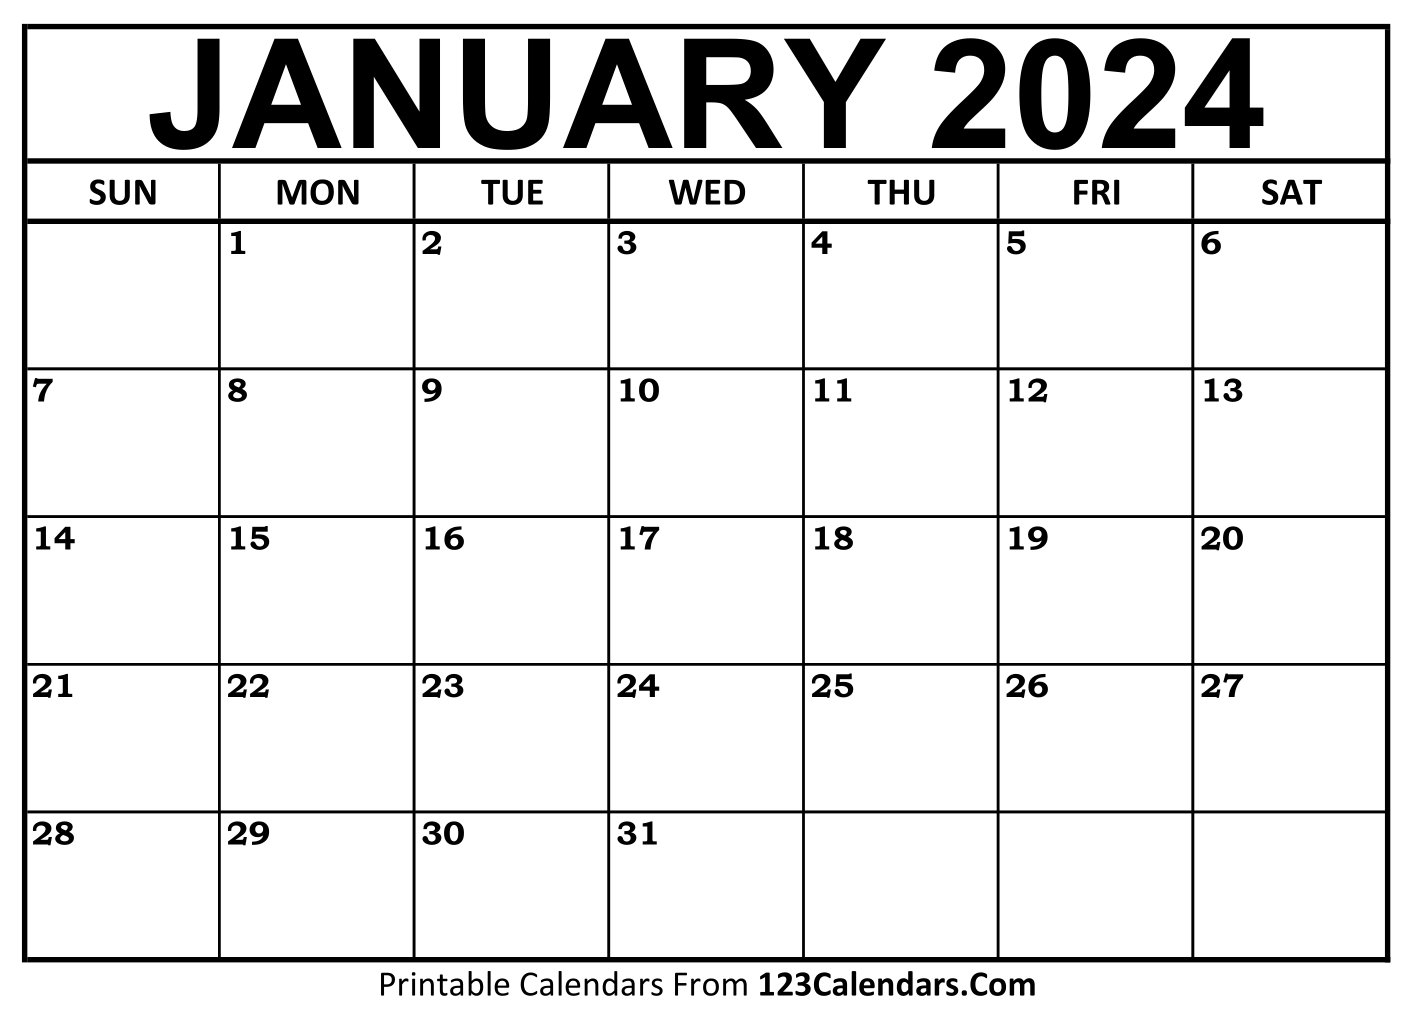 Printable January 2024 Calendar Templates - 123Calendars for Calendar Template January 2024 Printable